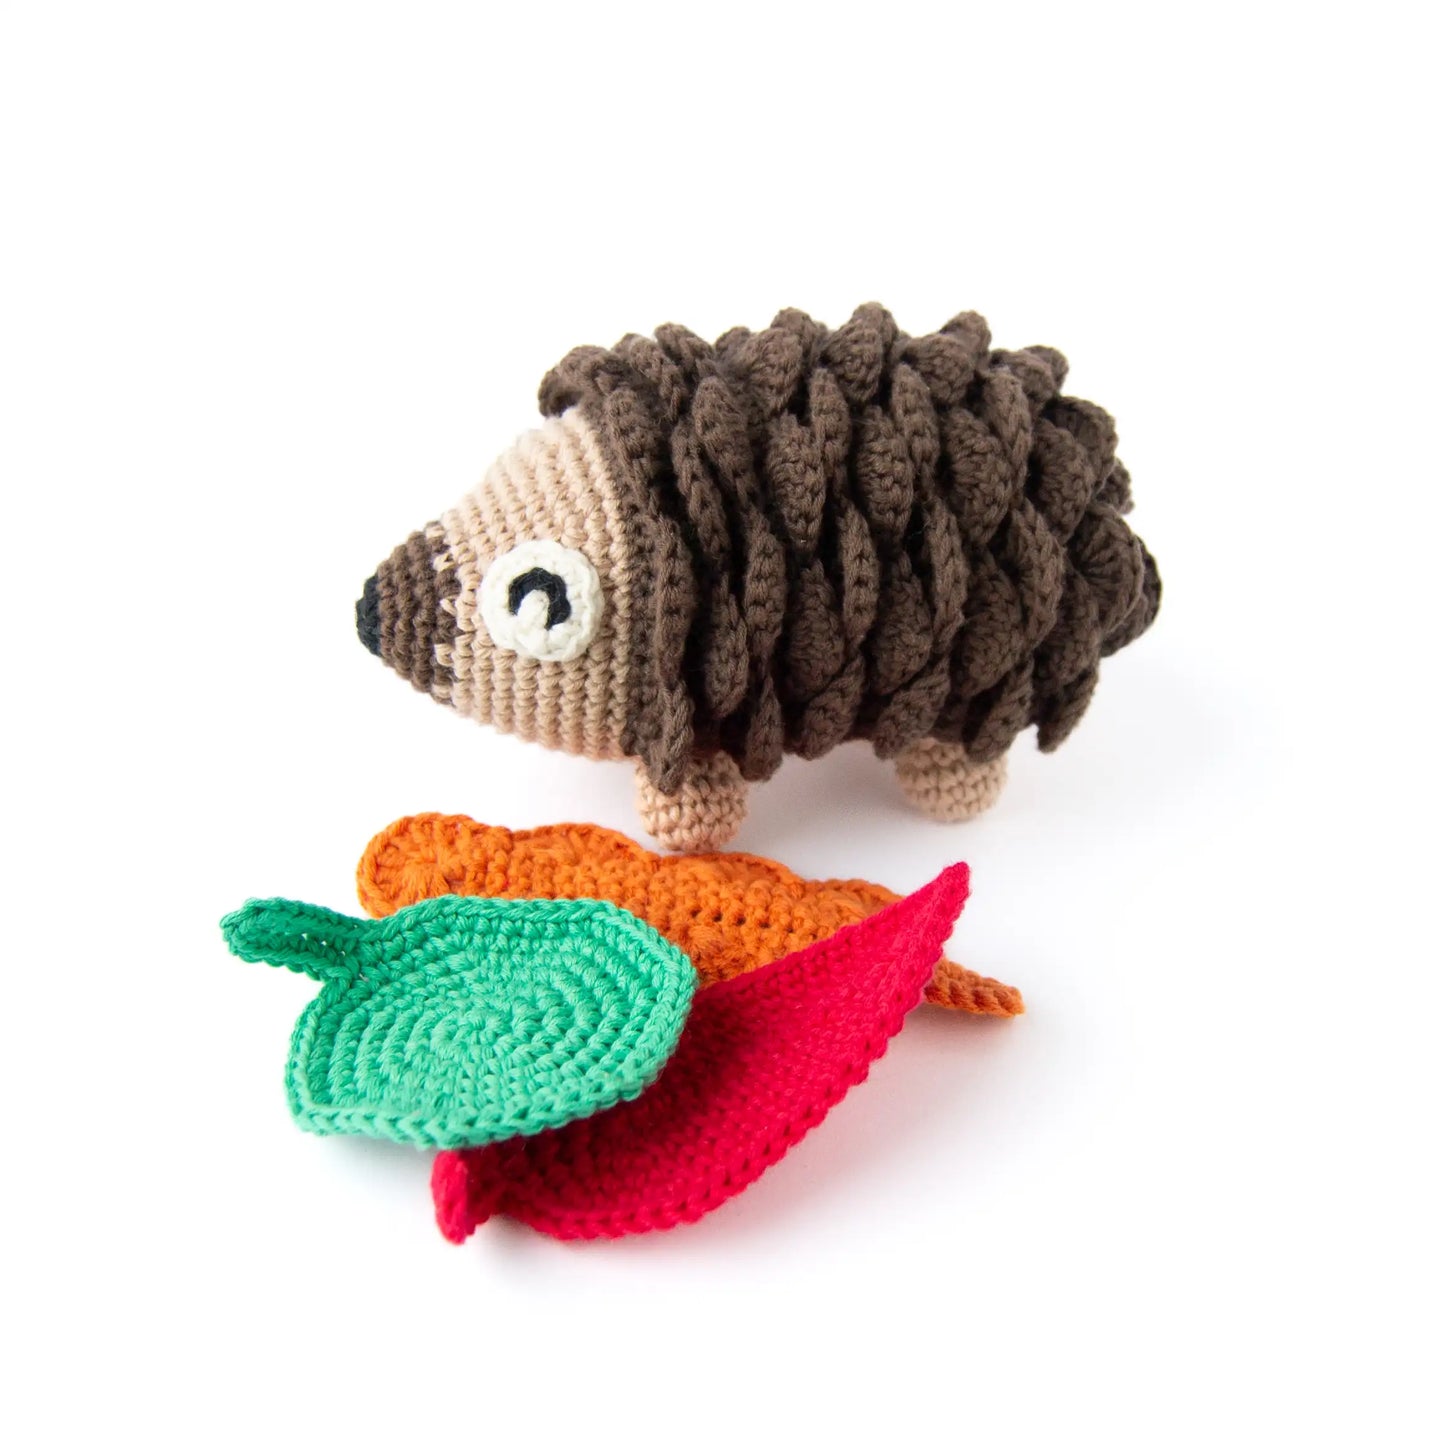 Henry the hedgehog | crochet amigurumi PDF pattern